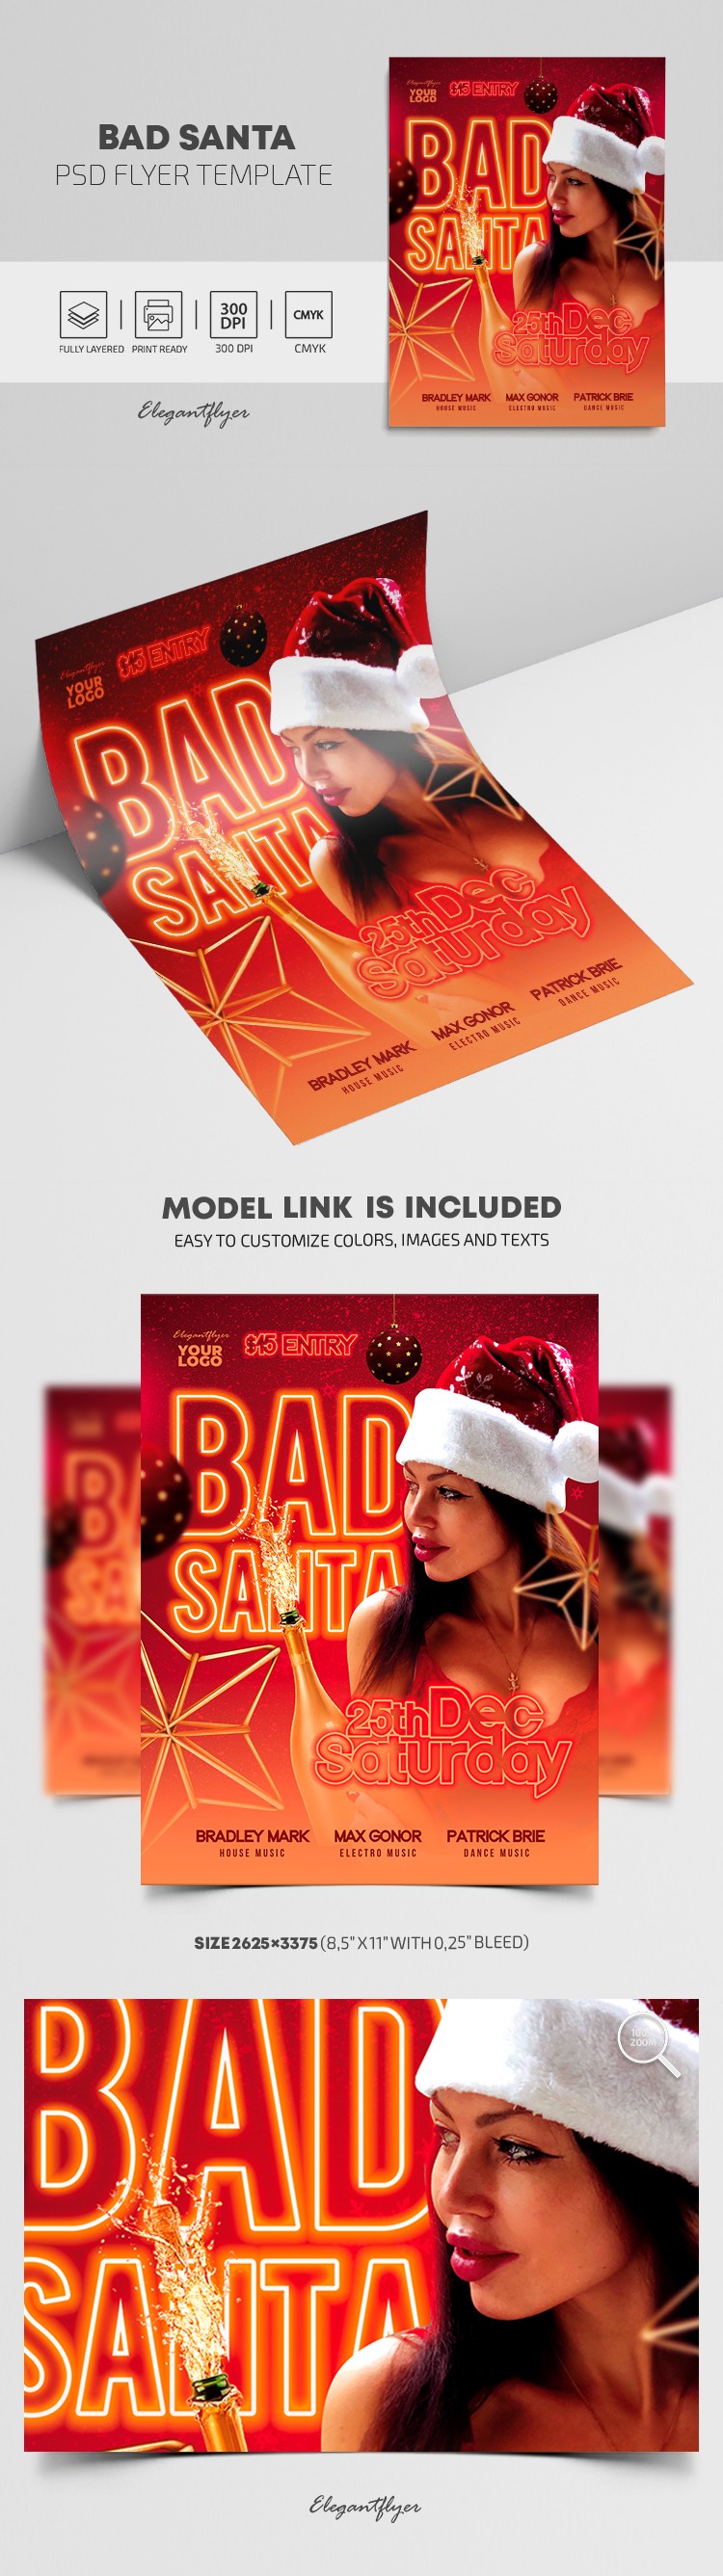 Bad Santa Flyer by ElegantFlyer